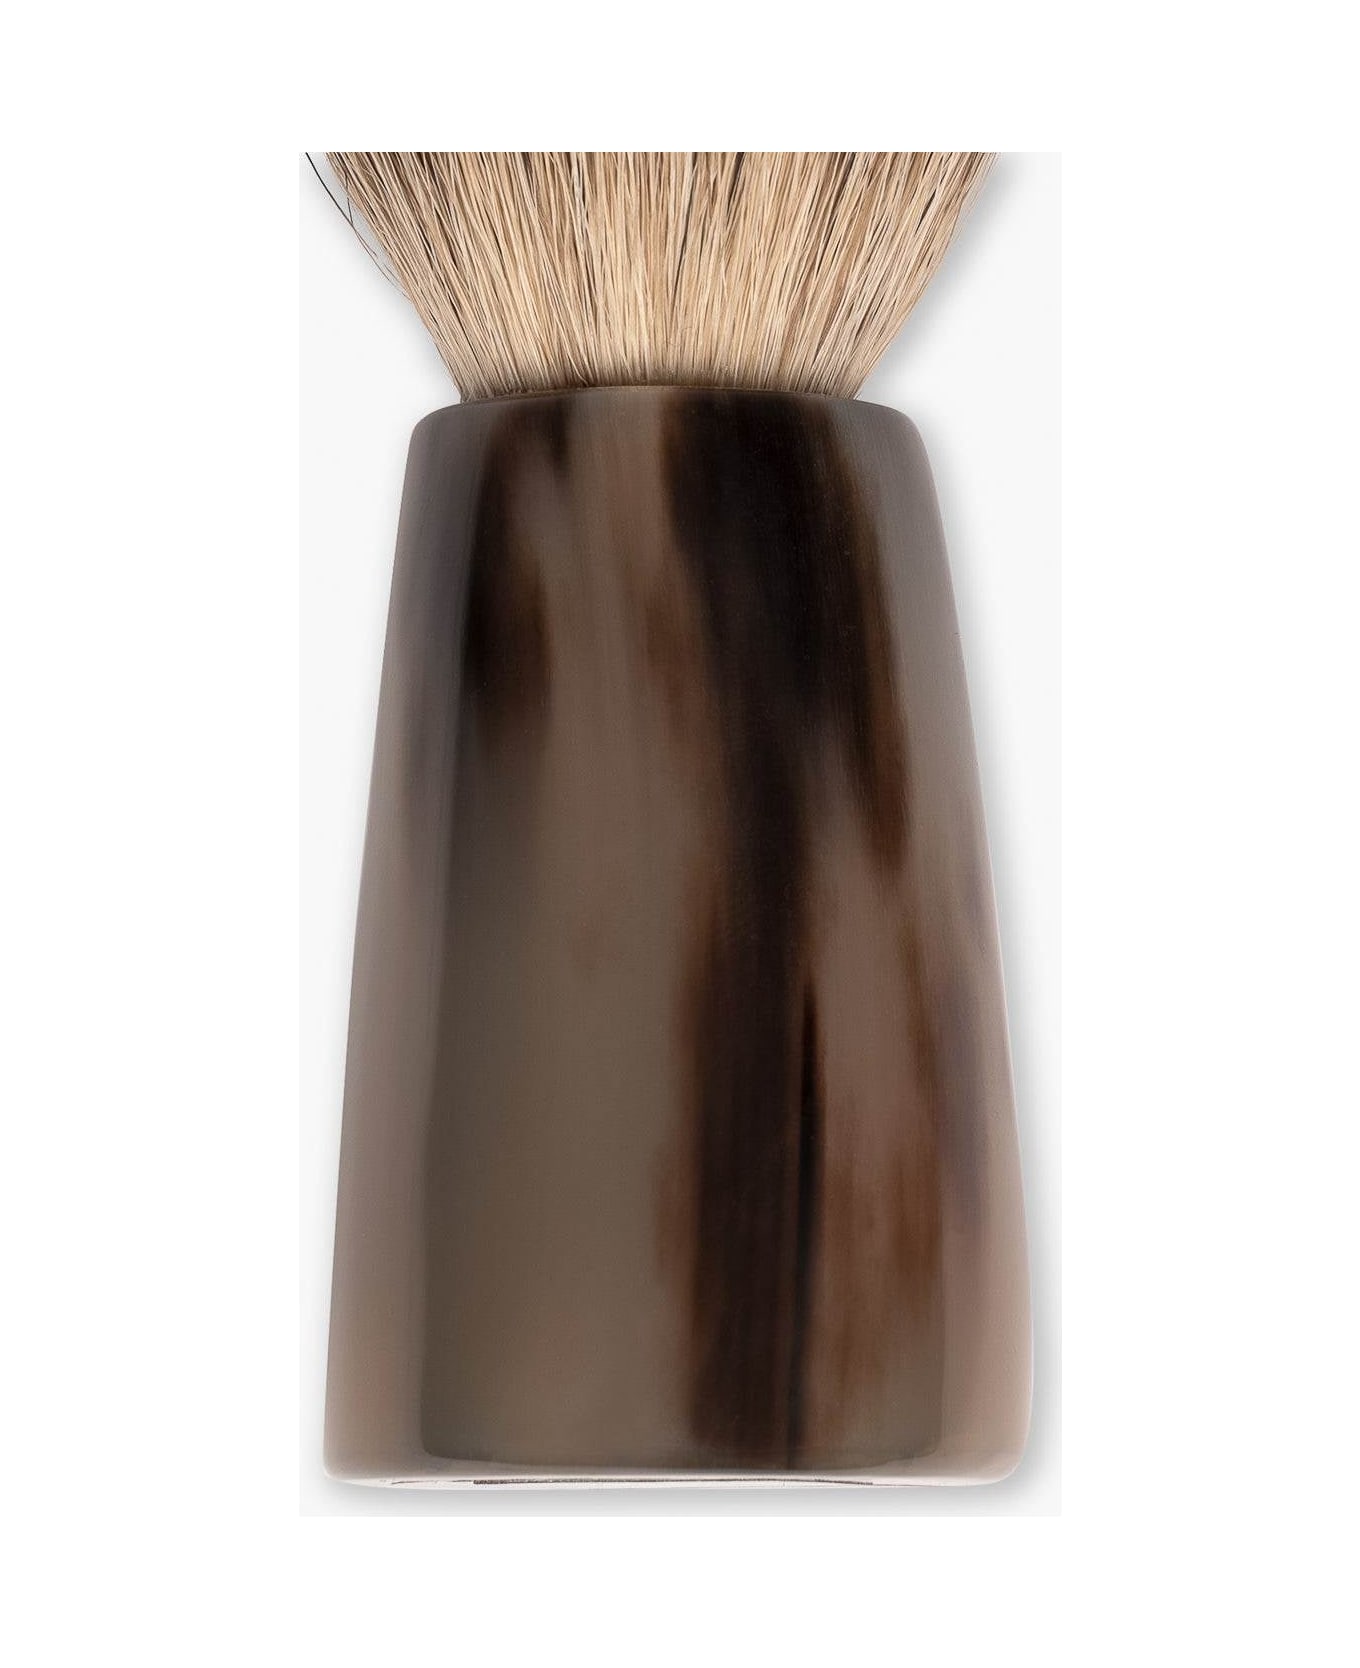 Larusmiani Shaving Brush 'g. Leopardi' Beauty - Neutral